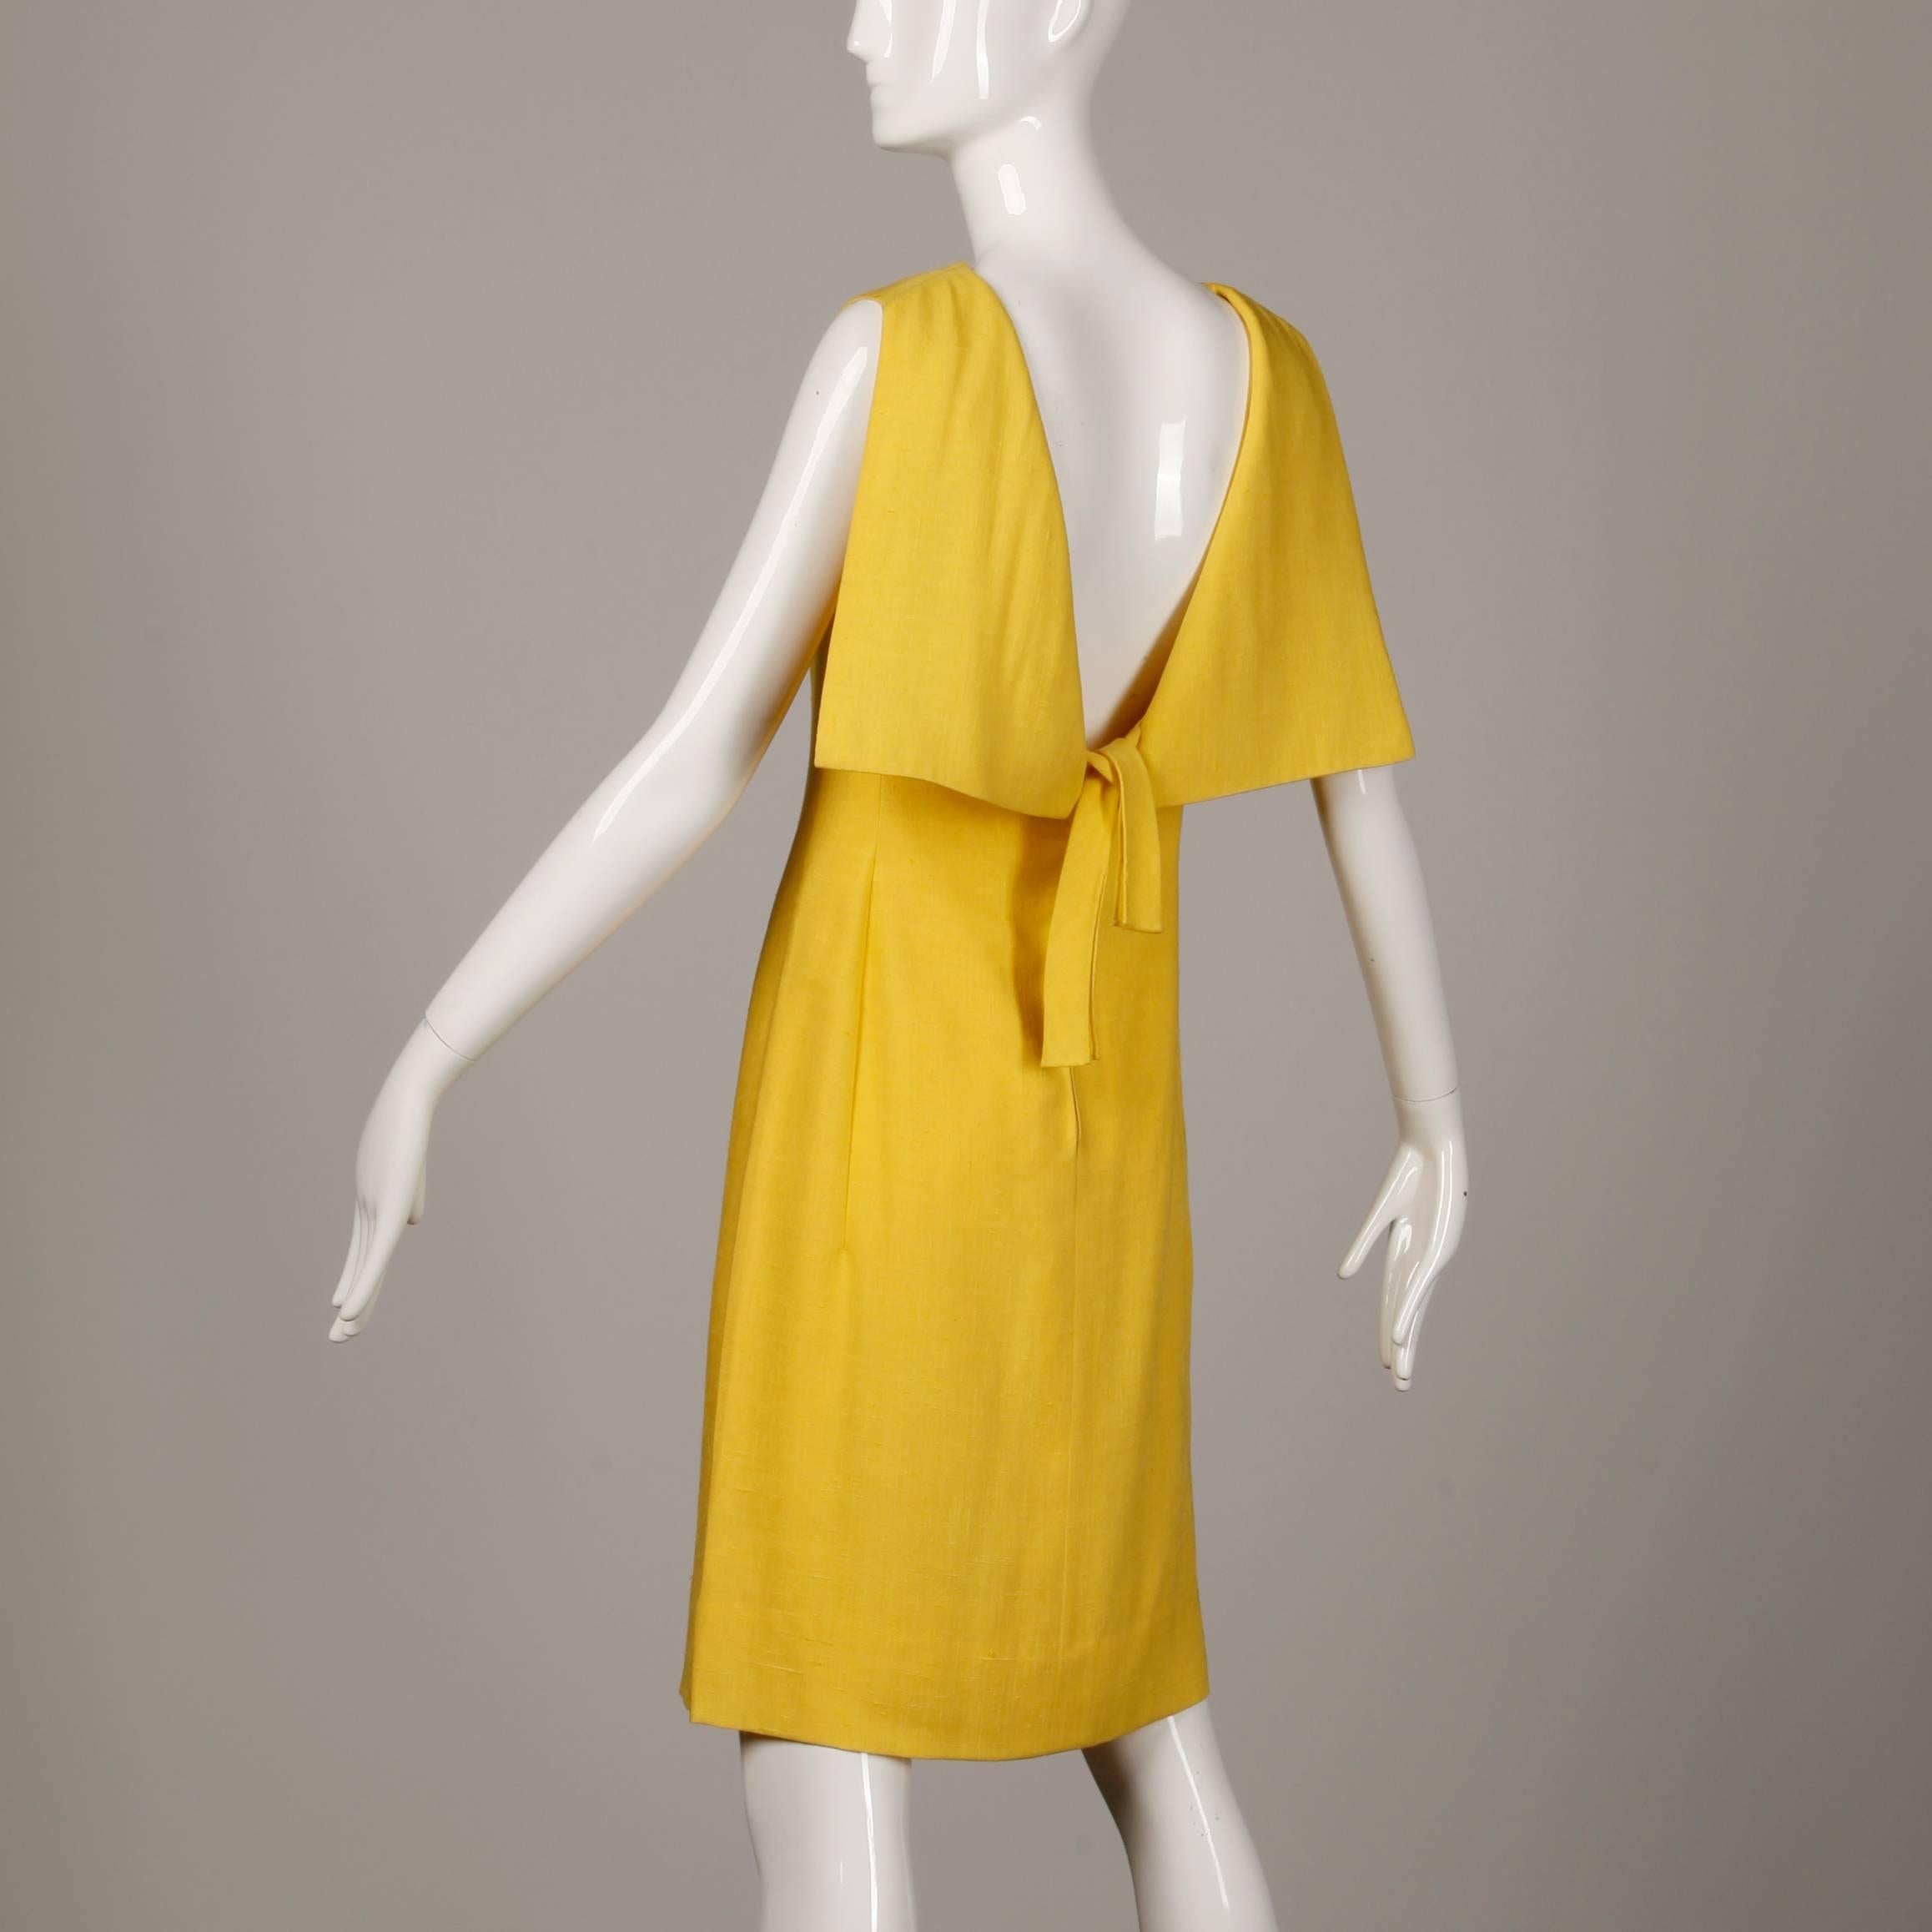 pauline in the yellow dress